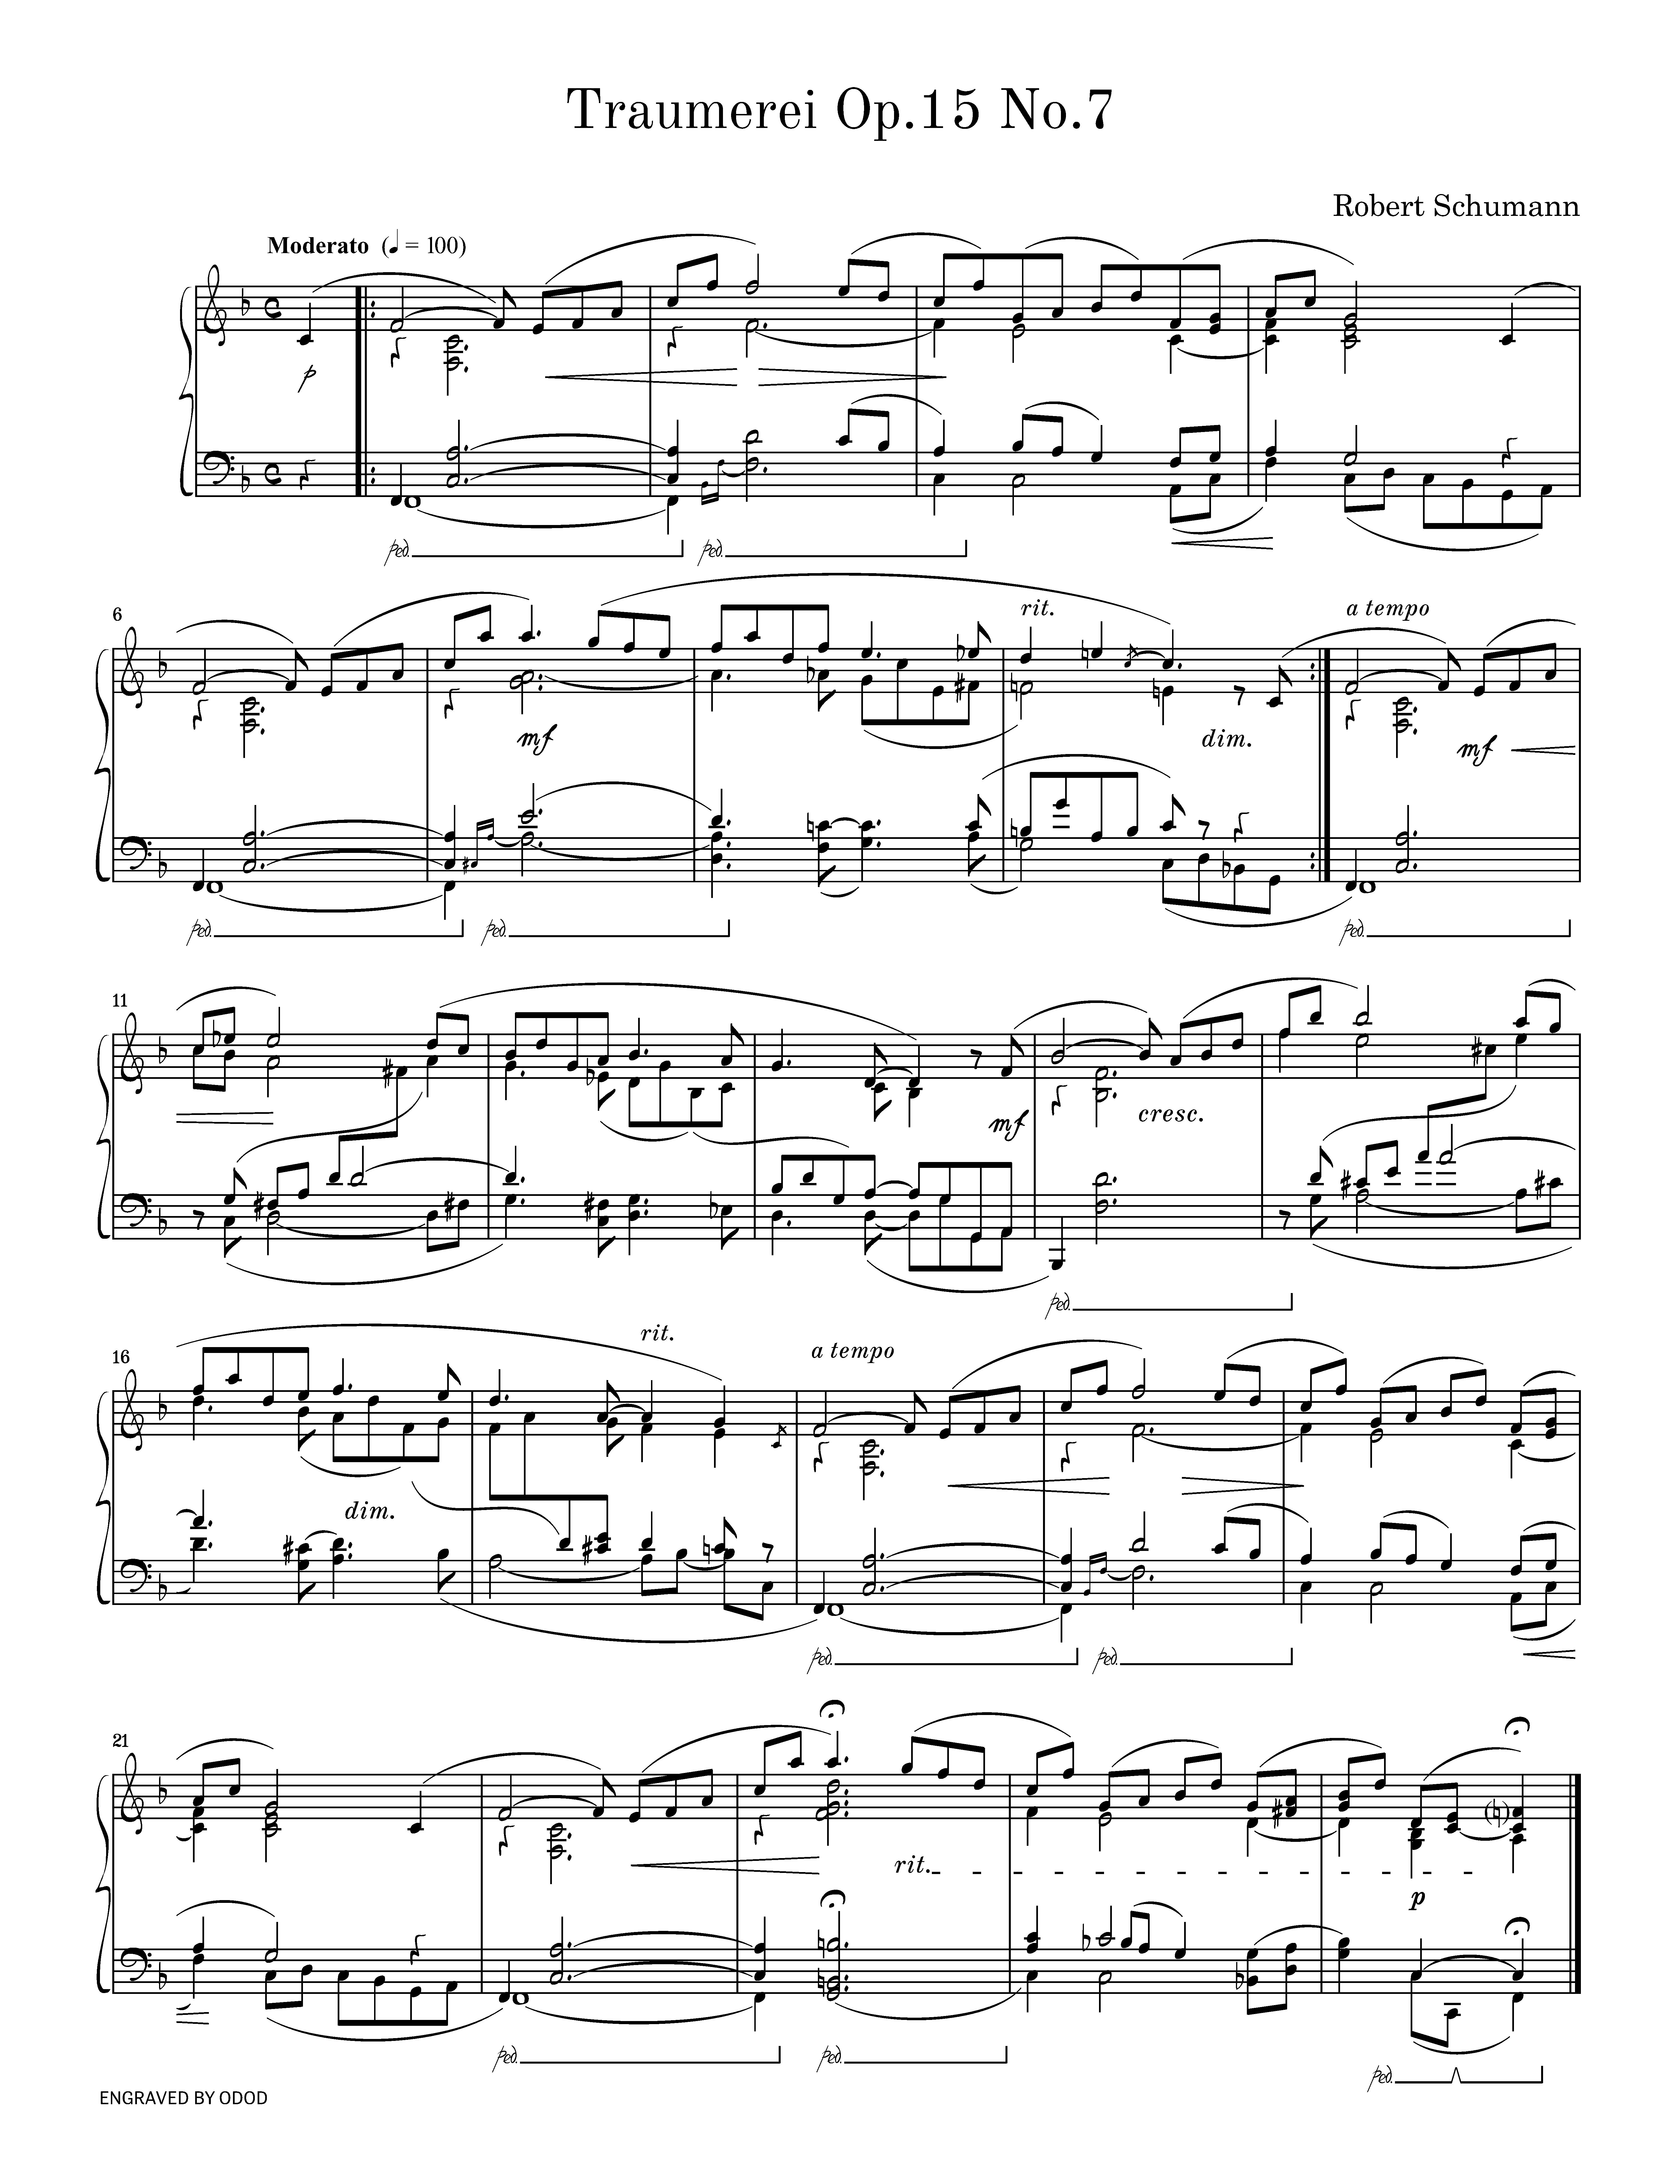 Traumerei - Schumann - Full Score.png